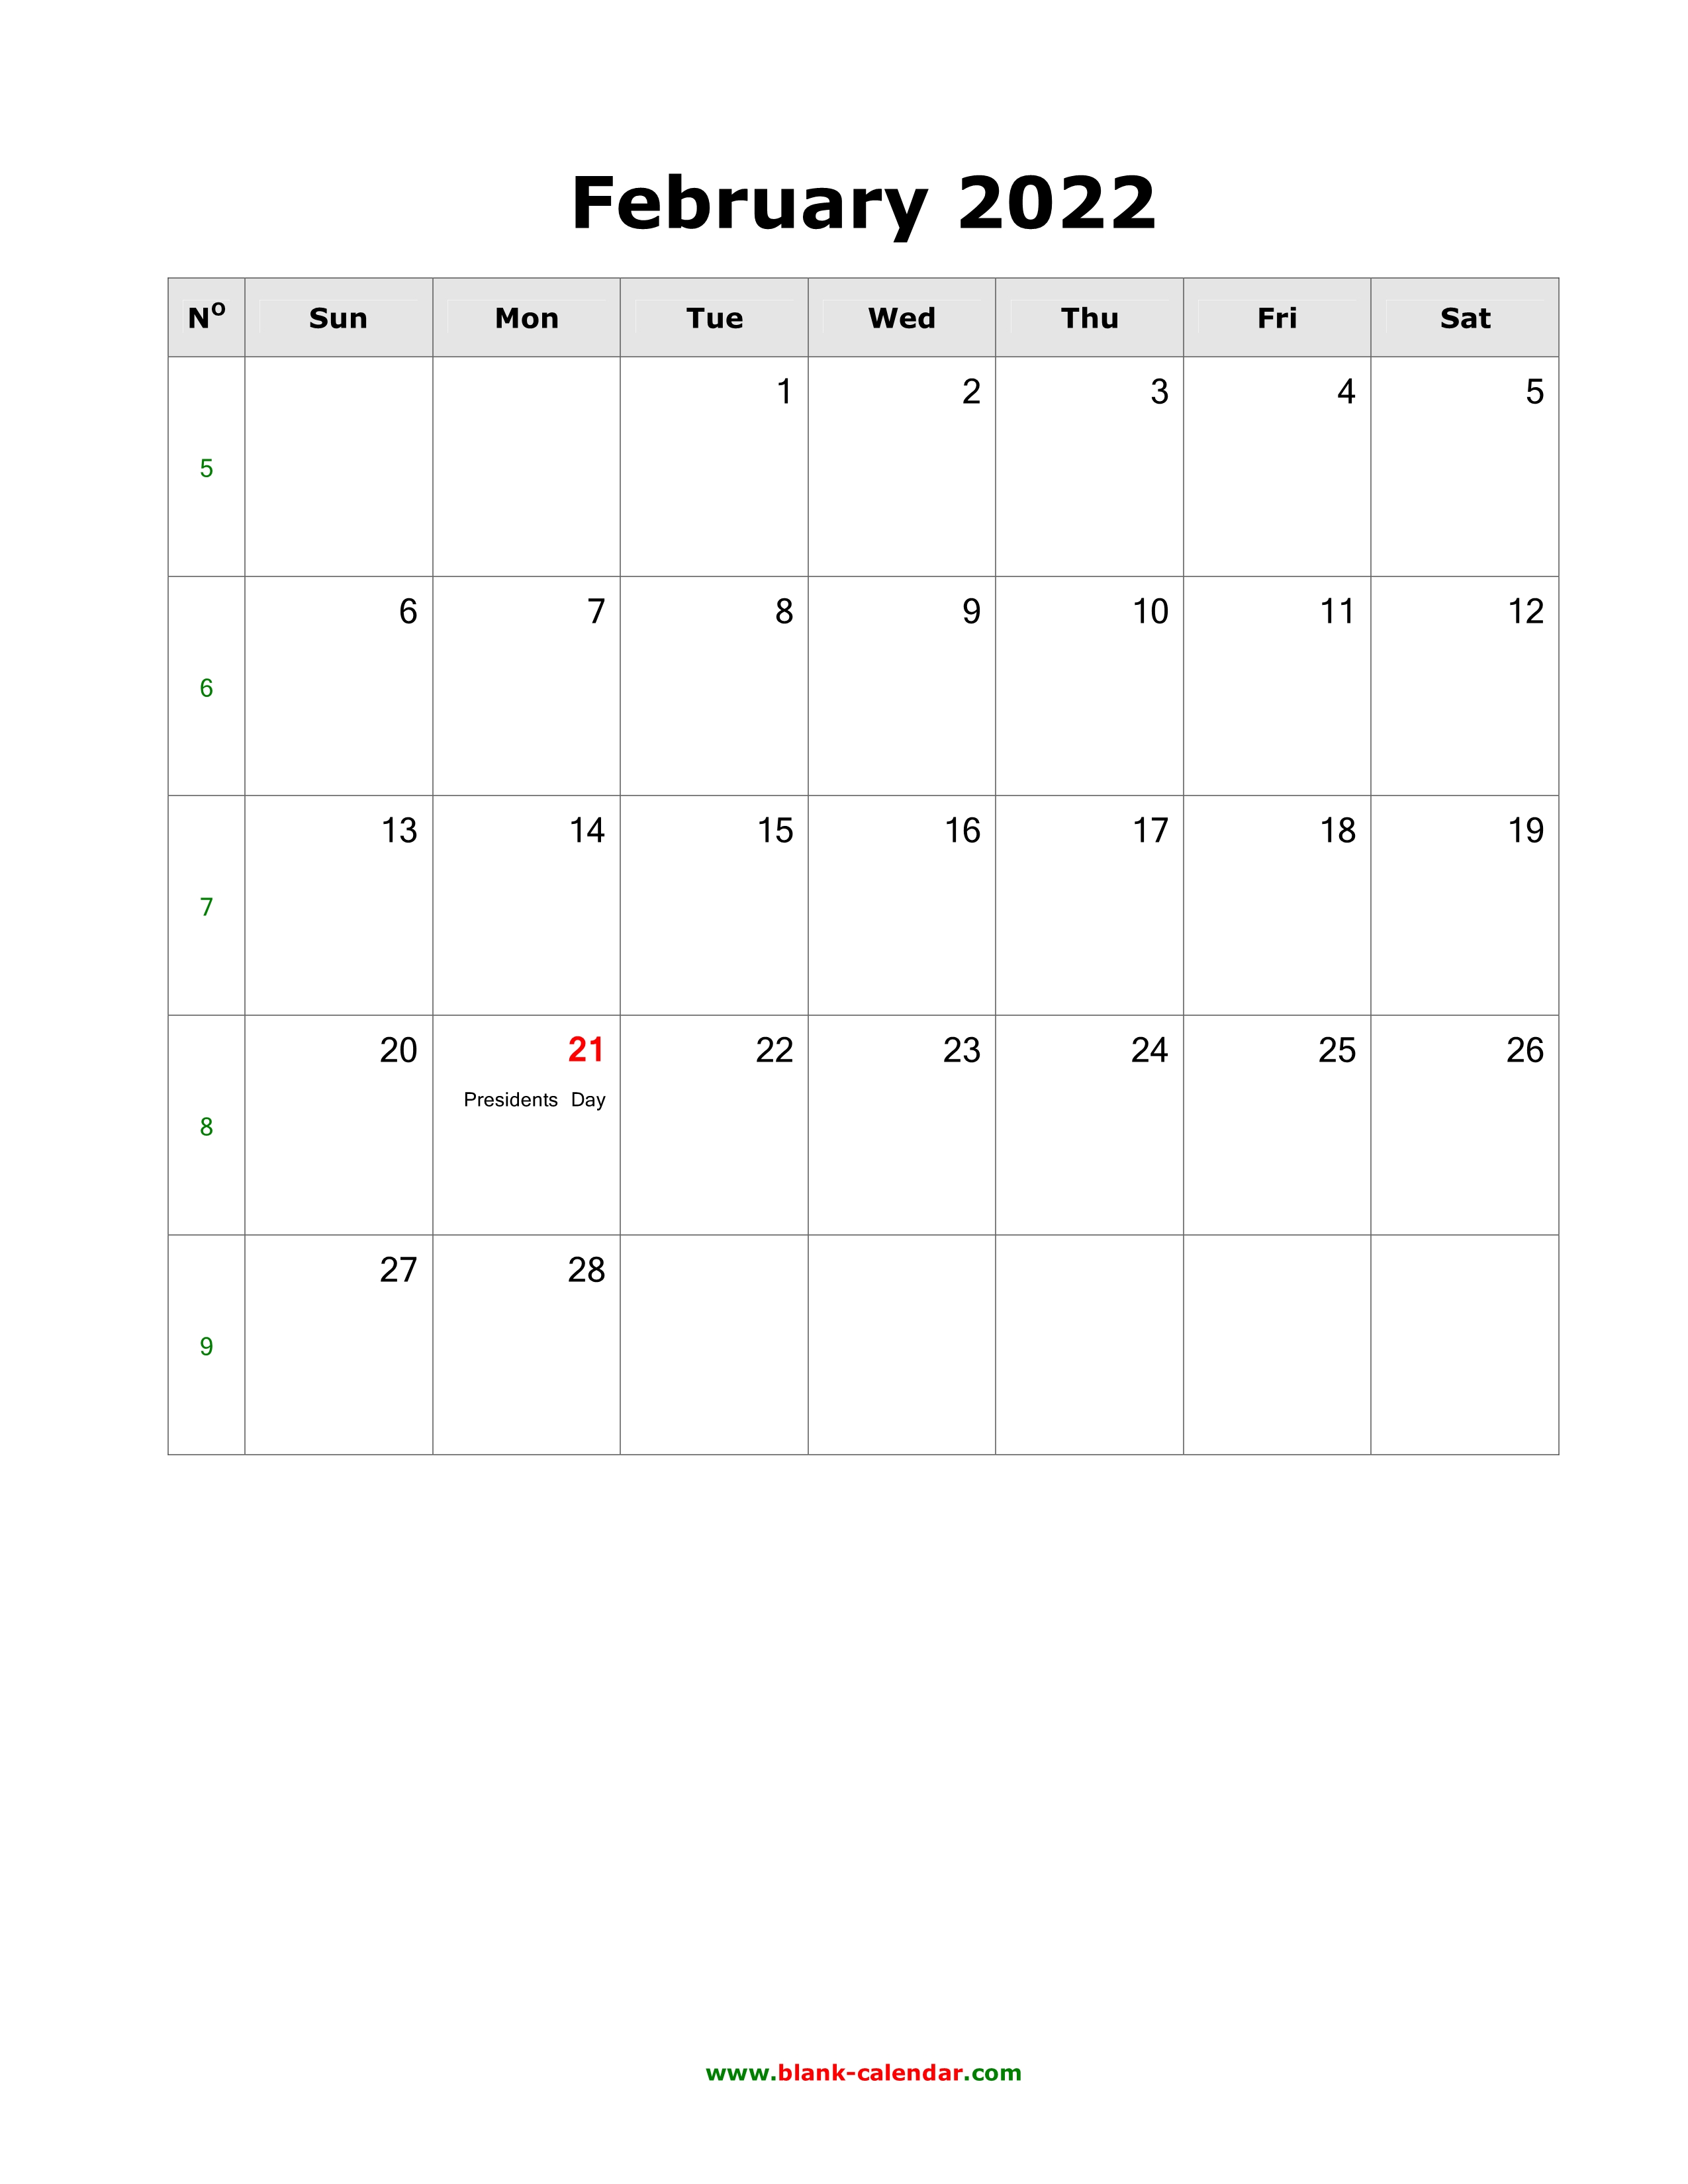 February 2022 Calendar Holidays Download February 2022 Blank Calendar With Us Holidays (Vertical)